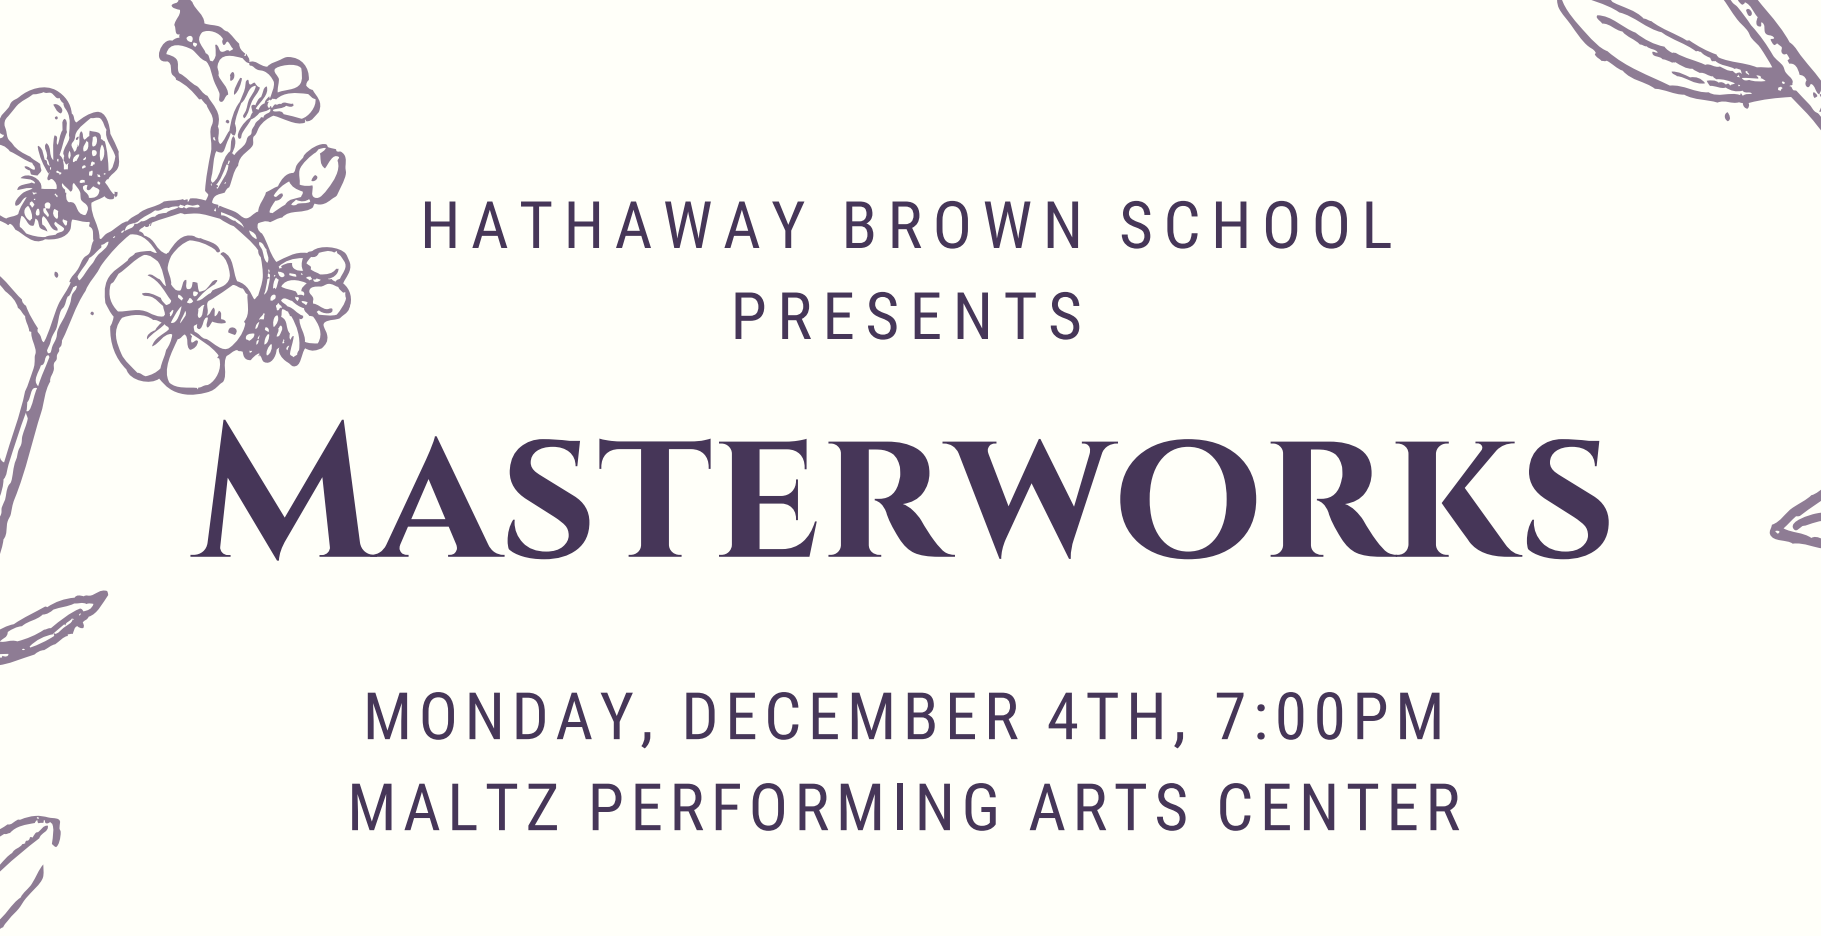 Hathaway Brown Masterworks